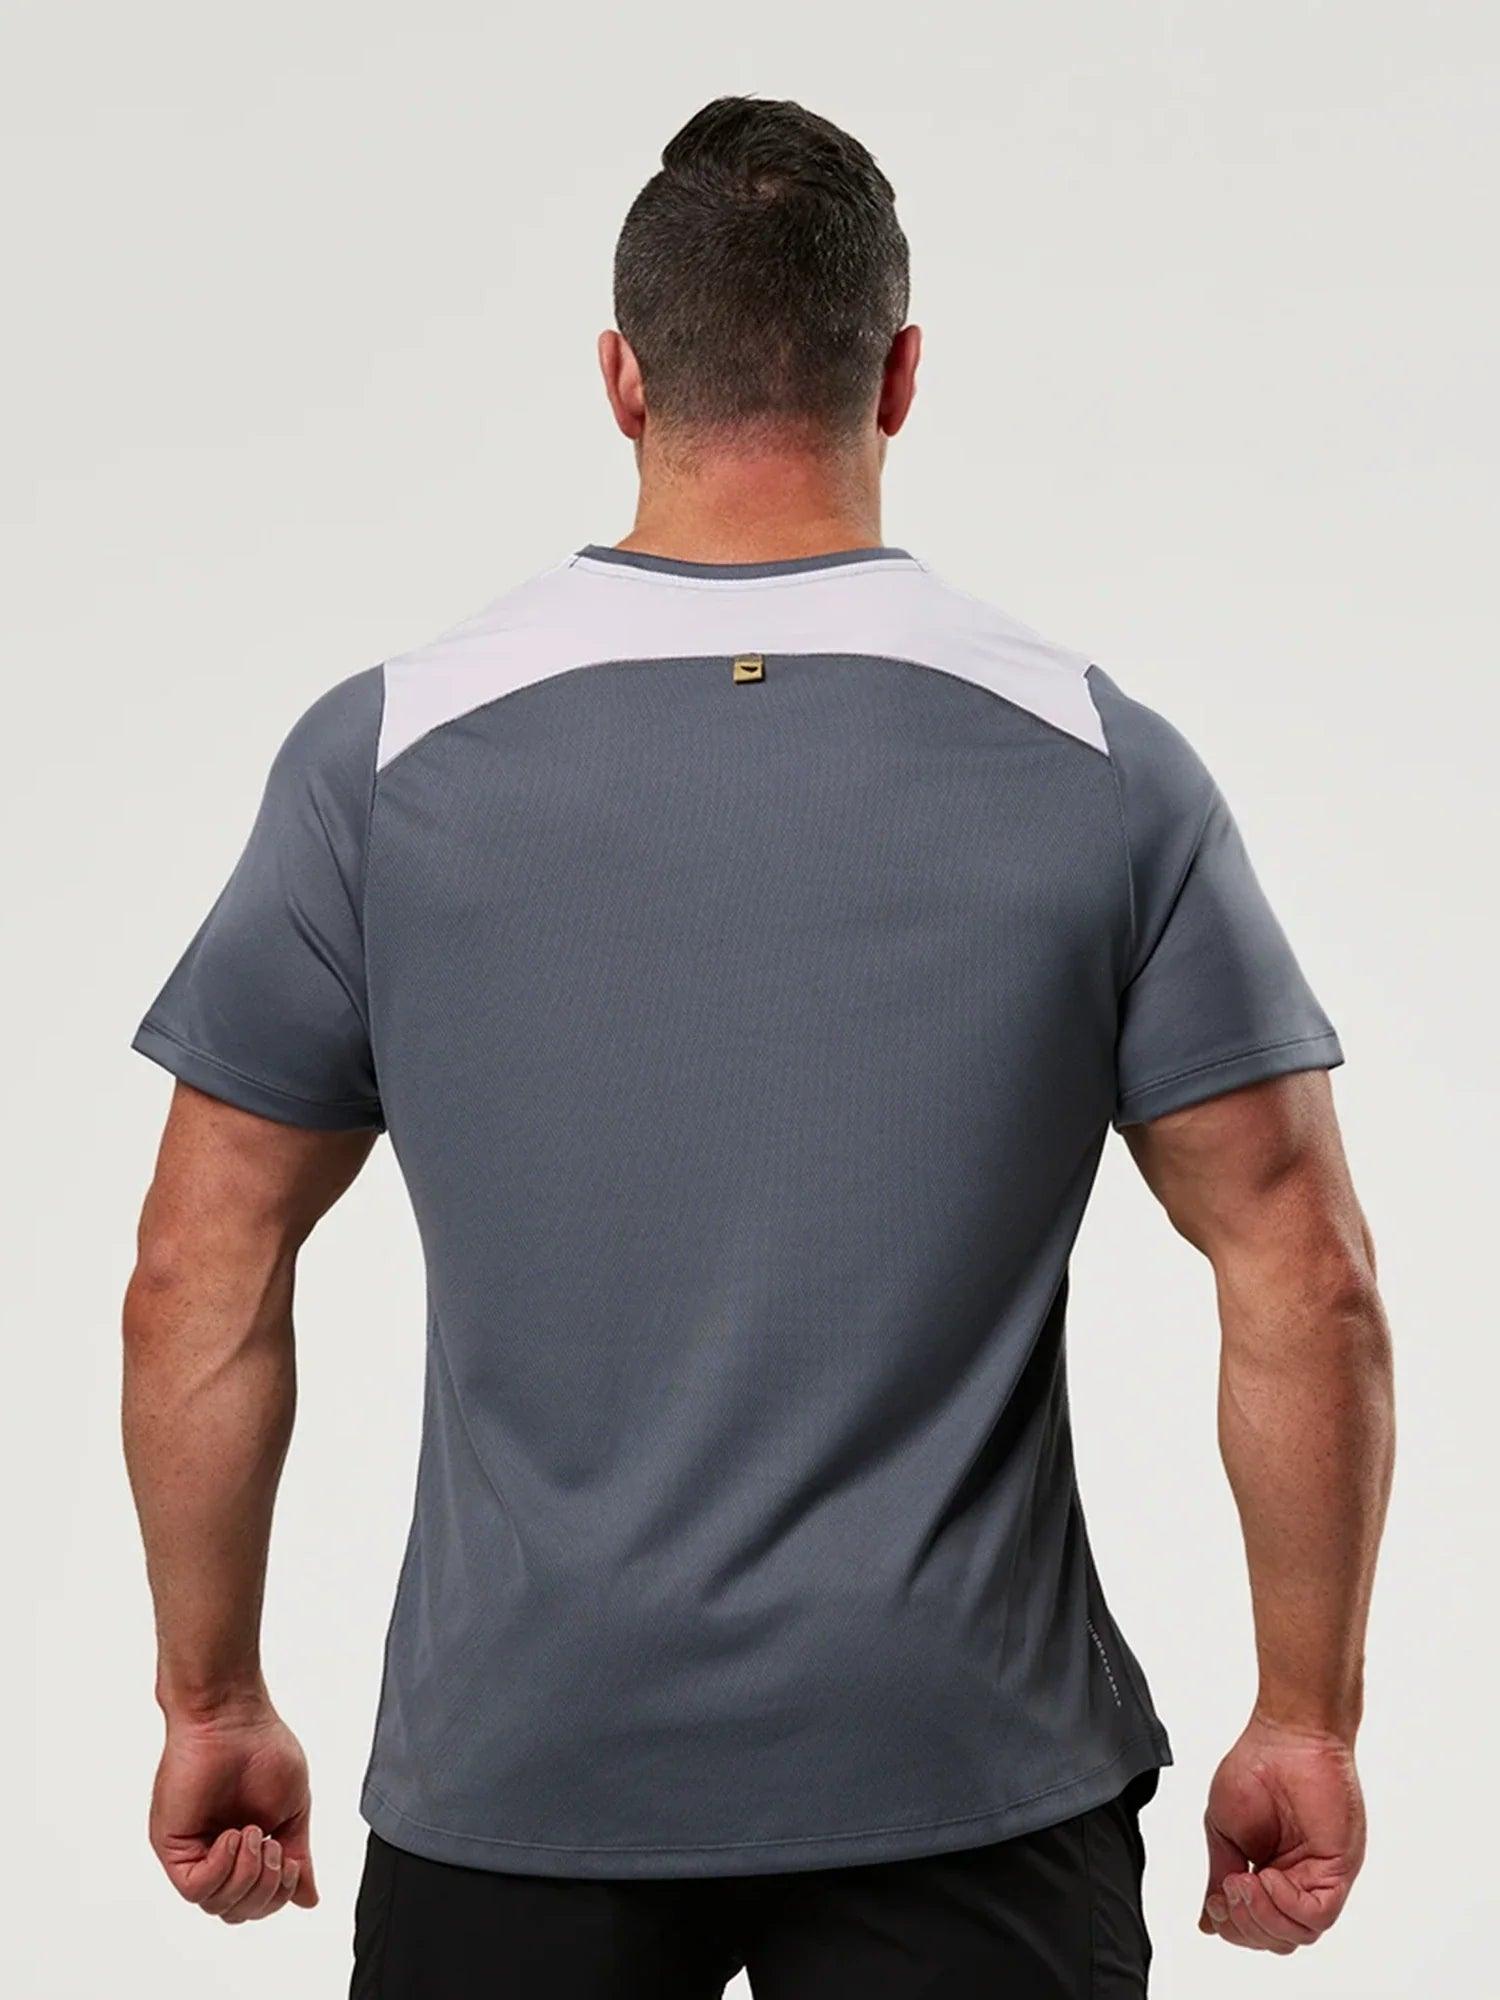 Men's Training T-shirt - Charcoal | SA1NT LAYERS